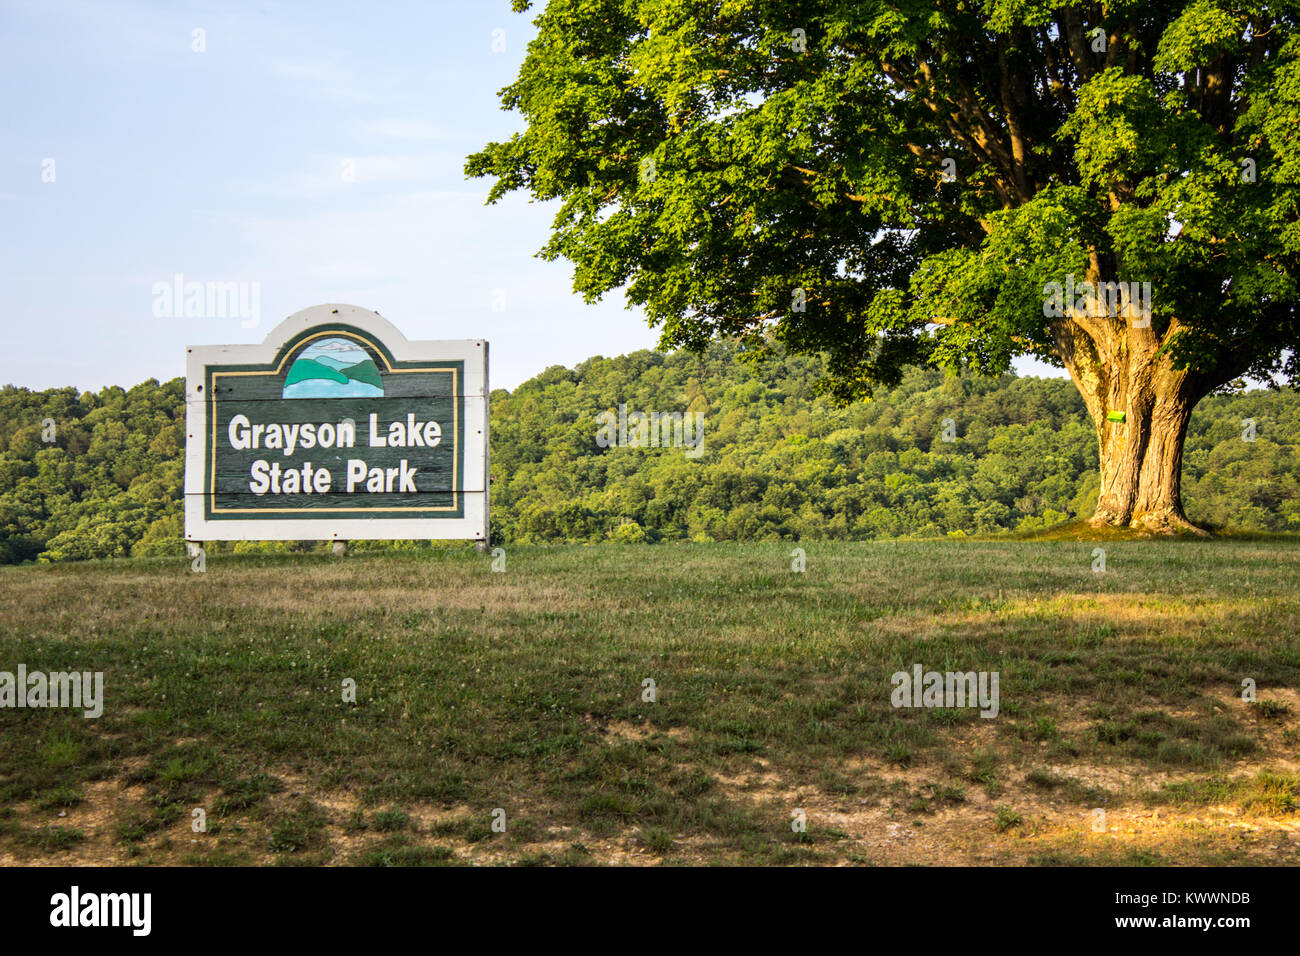 Grayson, Kentucky, USA - June 12, 2015: Welcome sign for Grayson Lake State Park in Kentucky. Grayson Lake encompasses more 1500 acres. Stock Photo